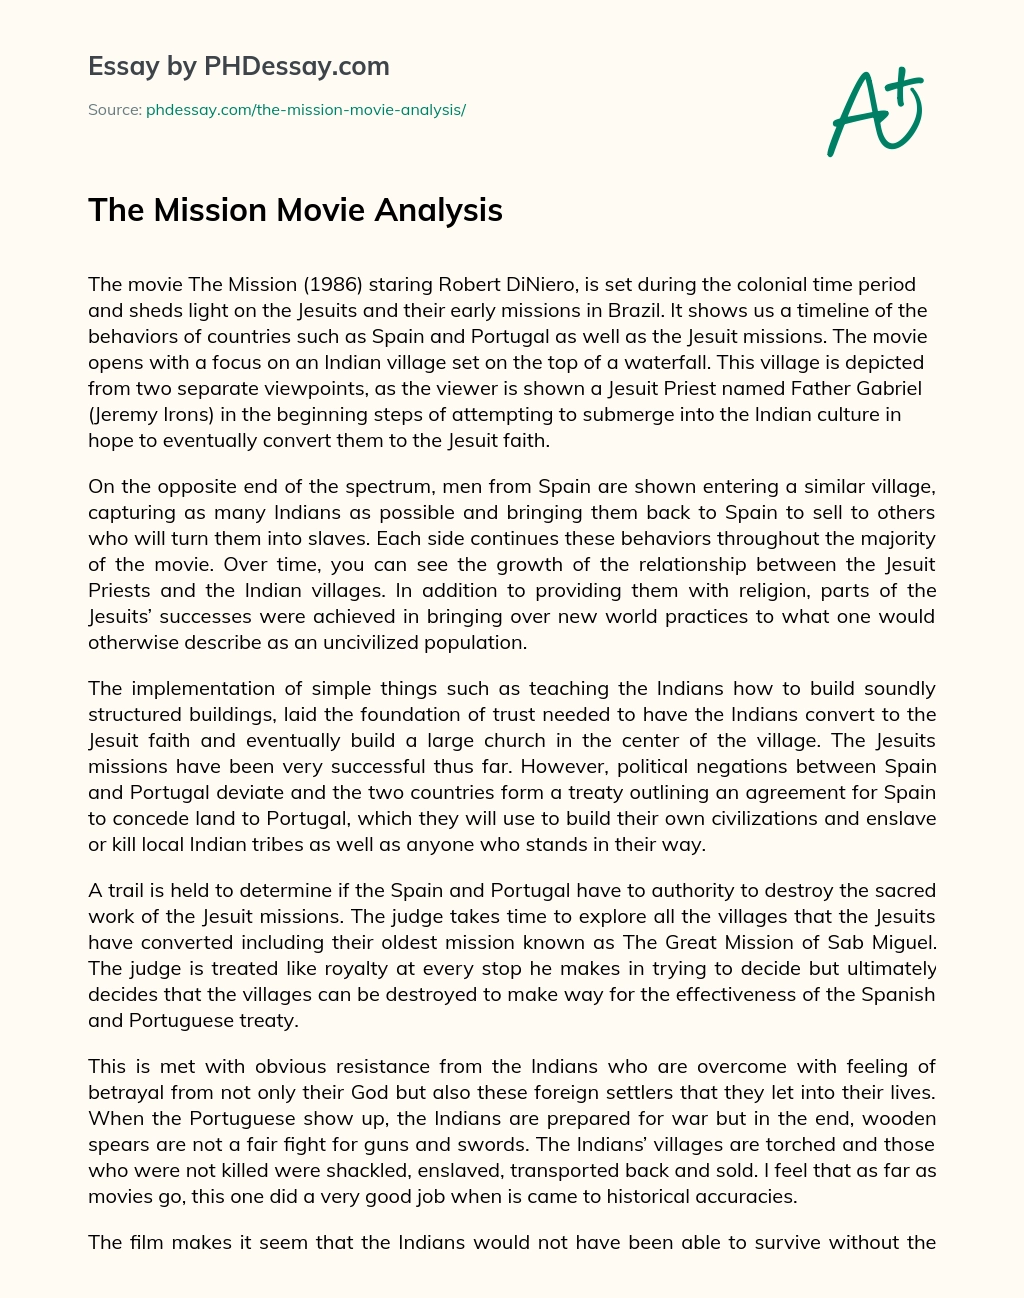 The Mission Movie Analysis essay